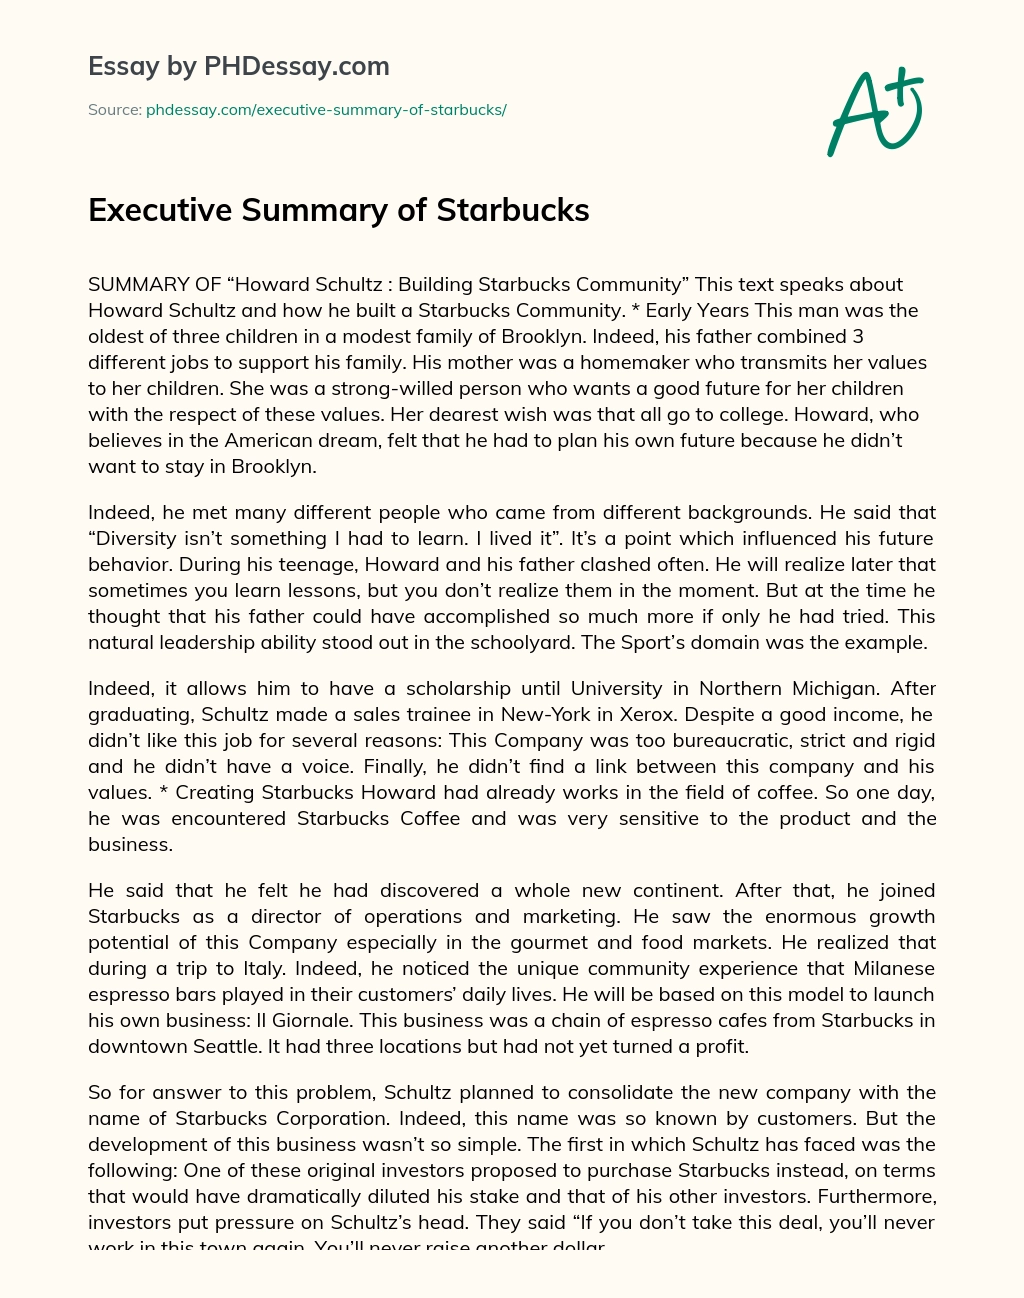 Executive Summary of Starbucks essay